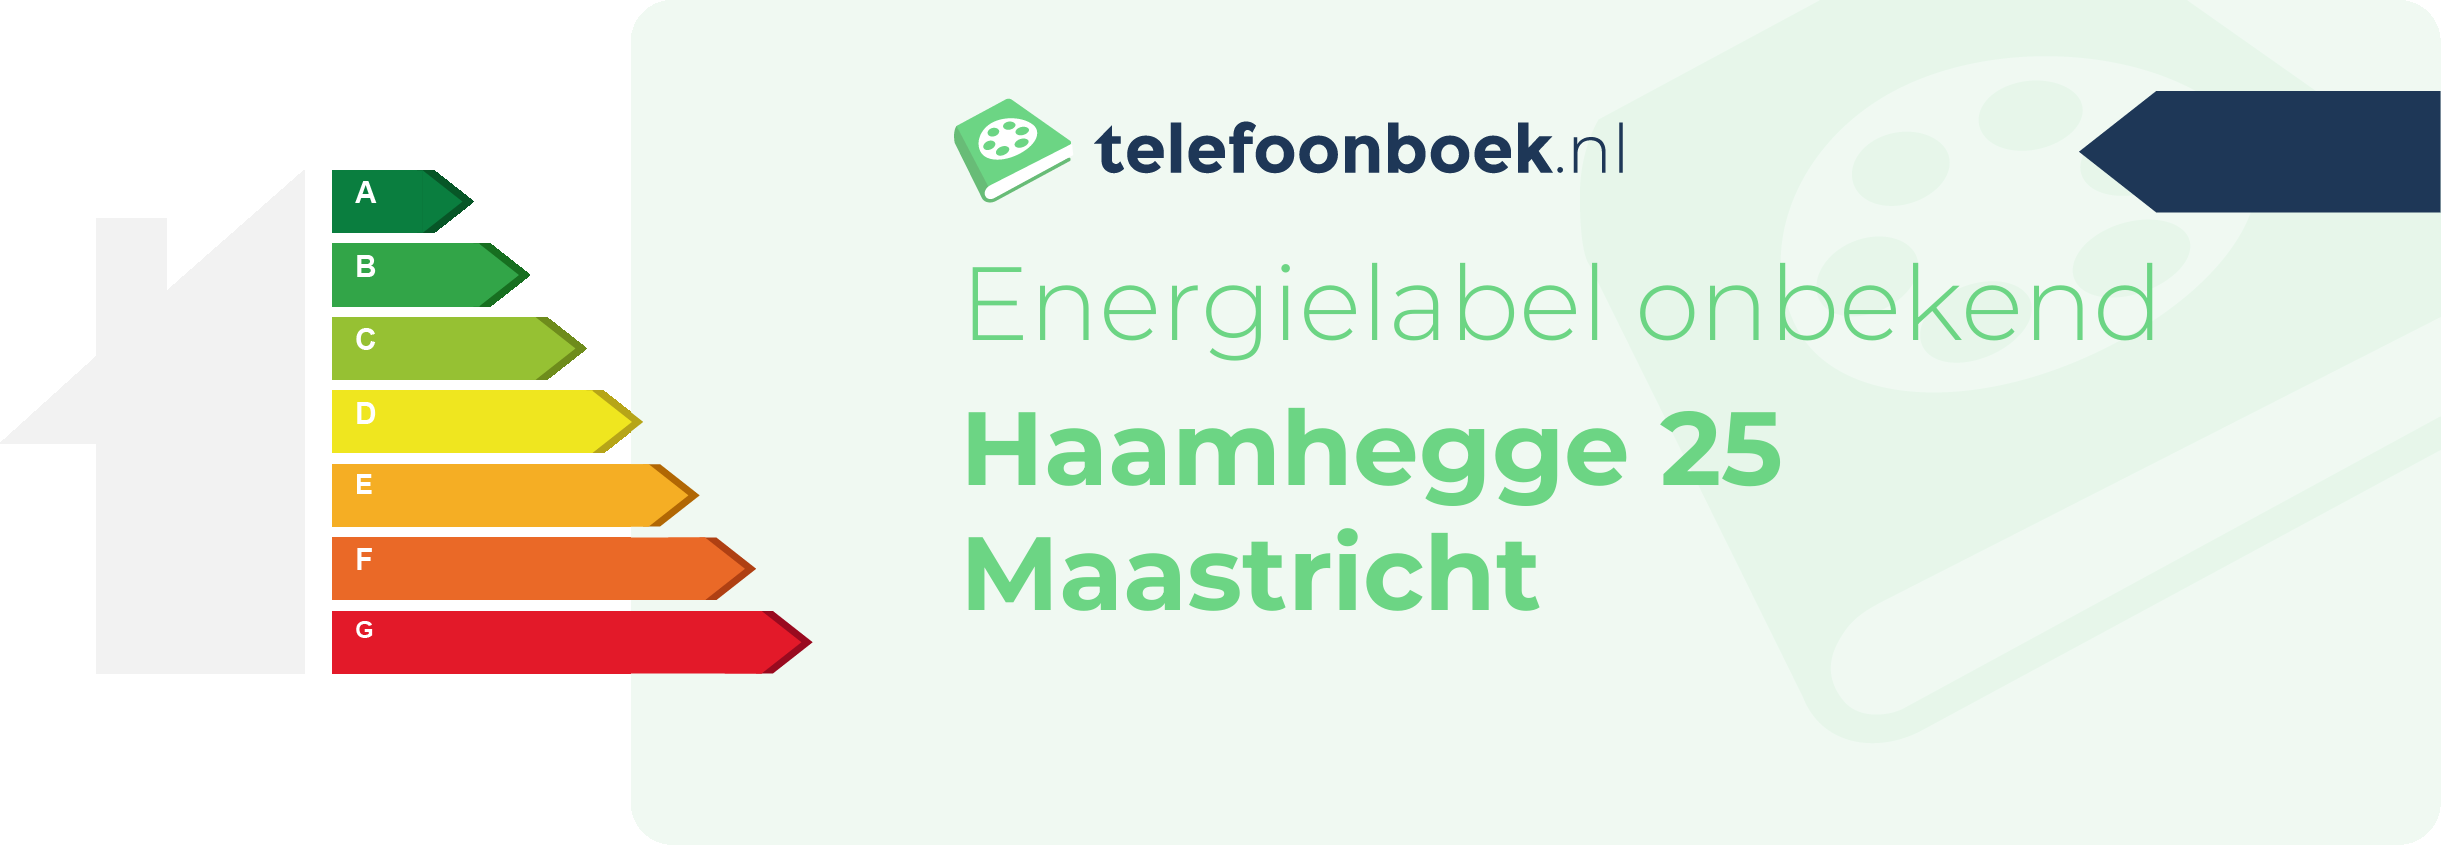 Energielabel Haamhegge 25 Maastricht